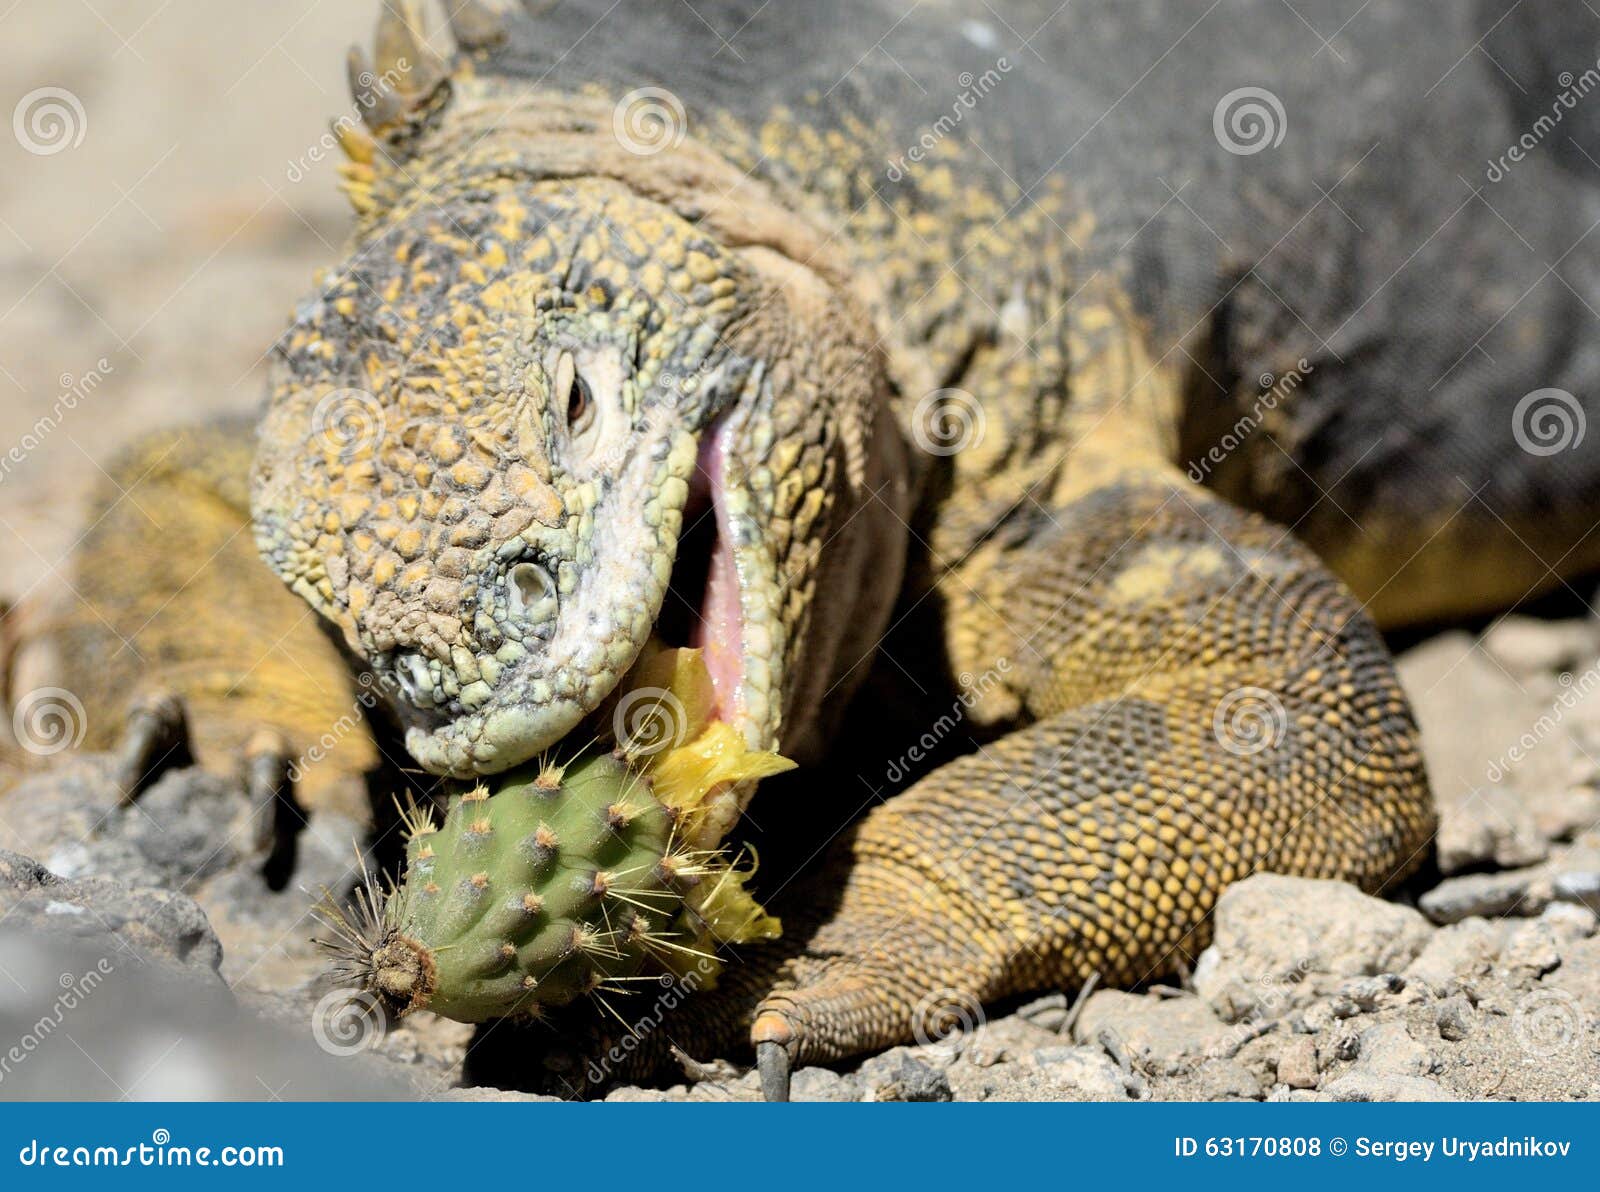 sharp meal. the land iguana eating prickly pear cactus.the galapagos land iguana (conolophus subcristatus)